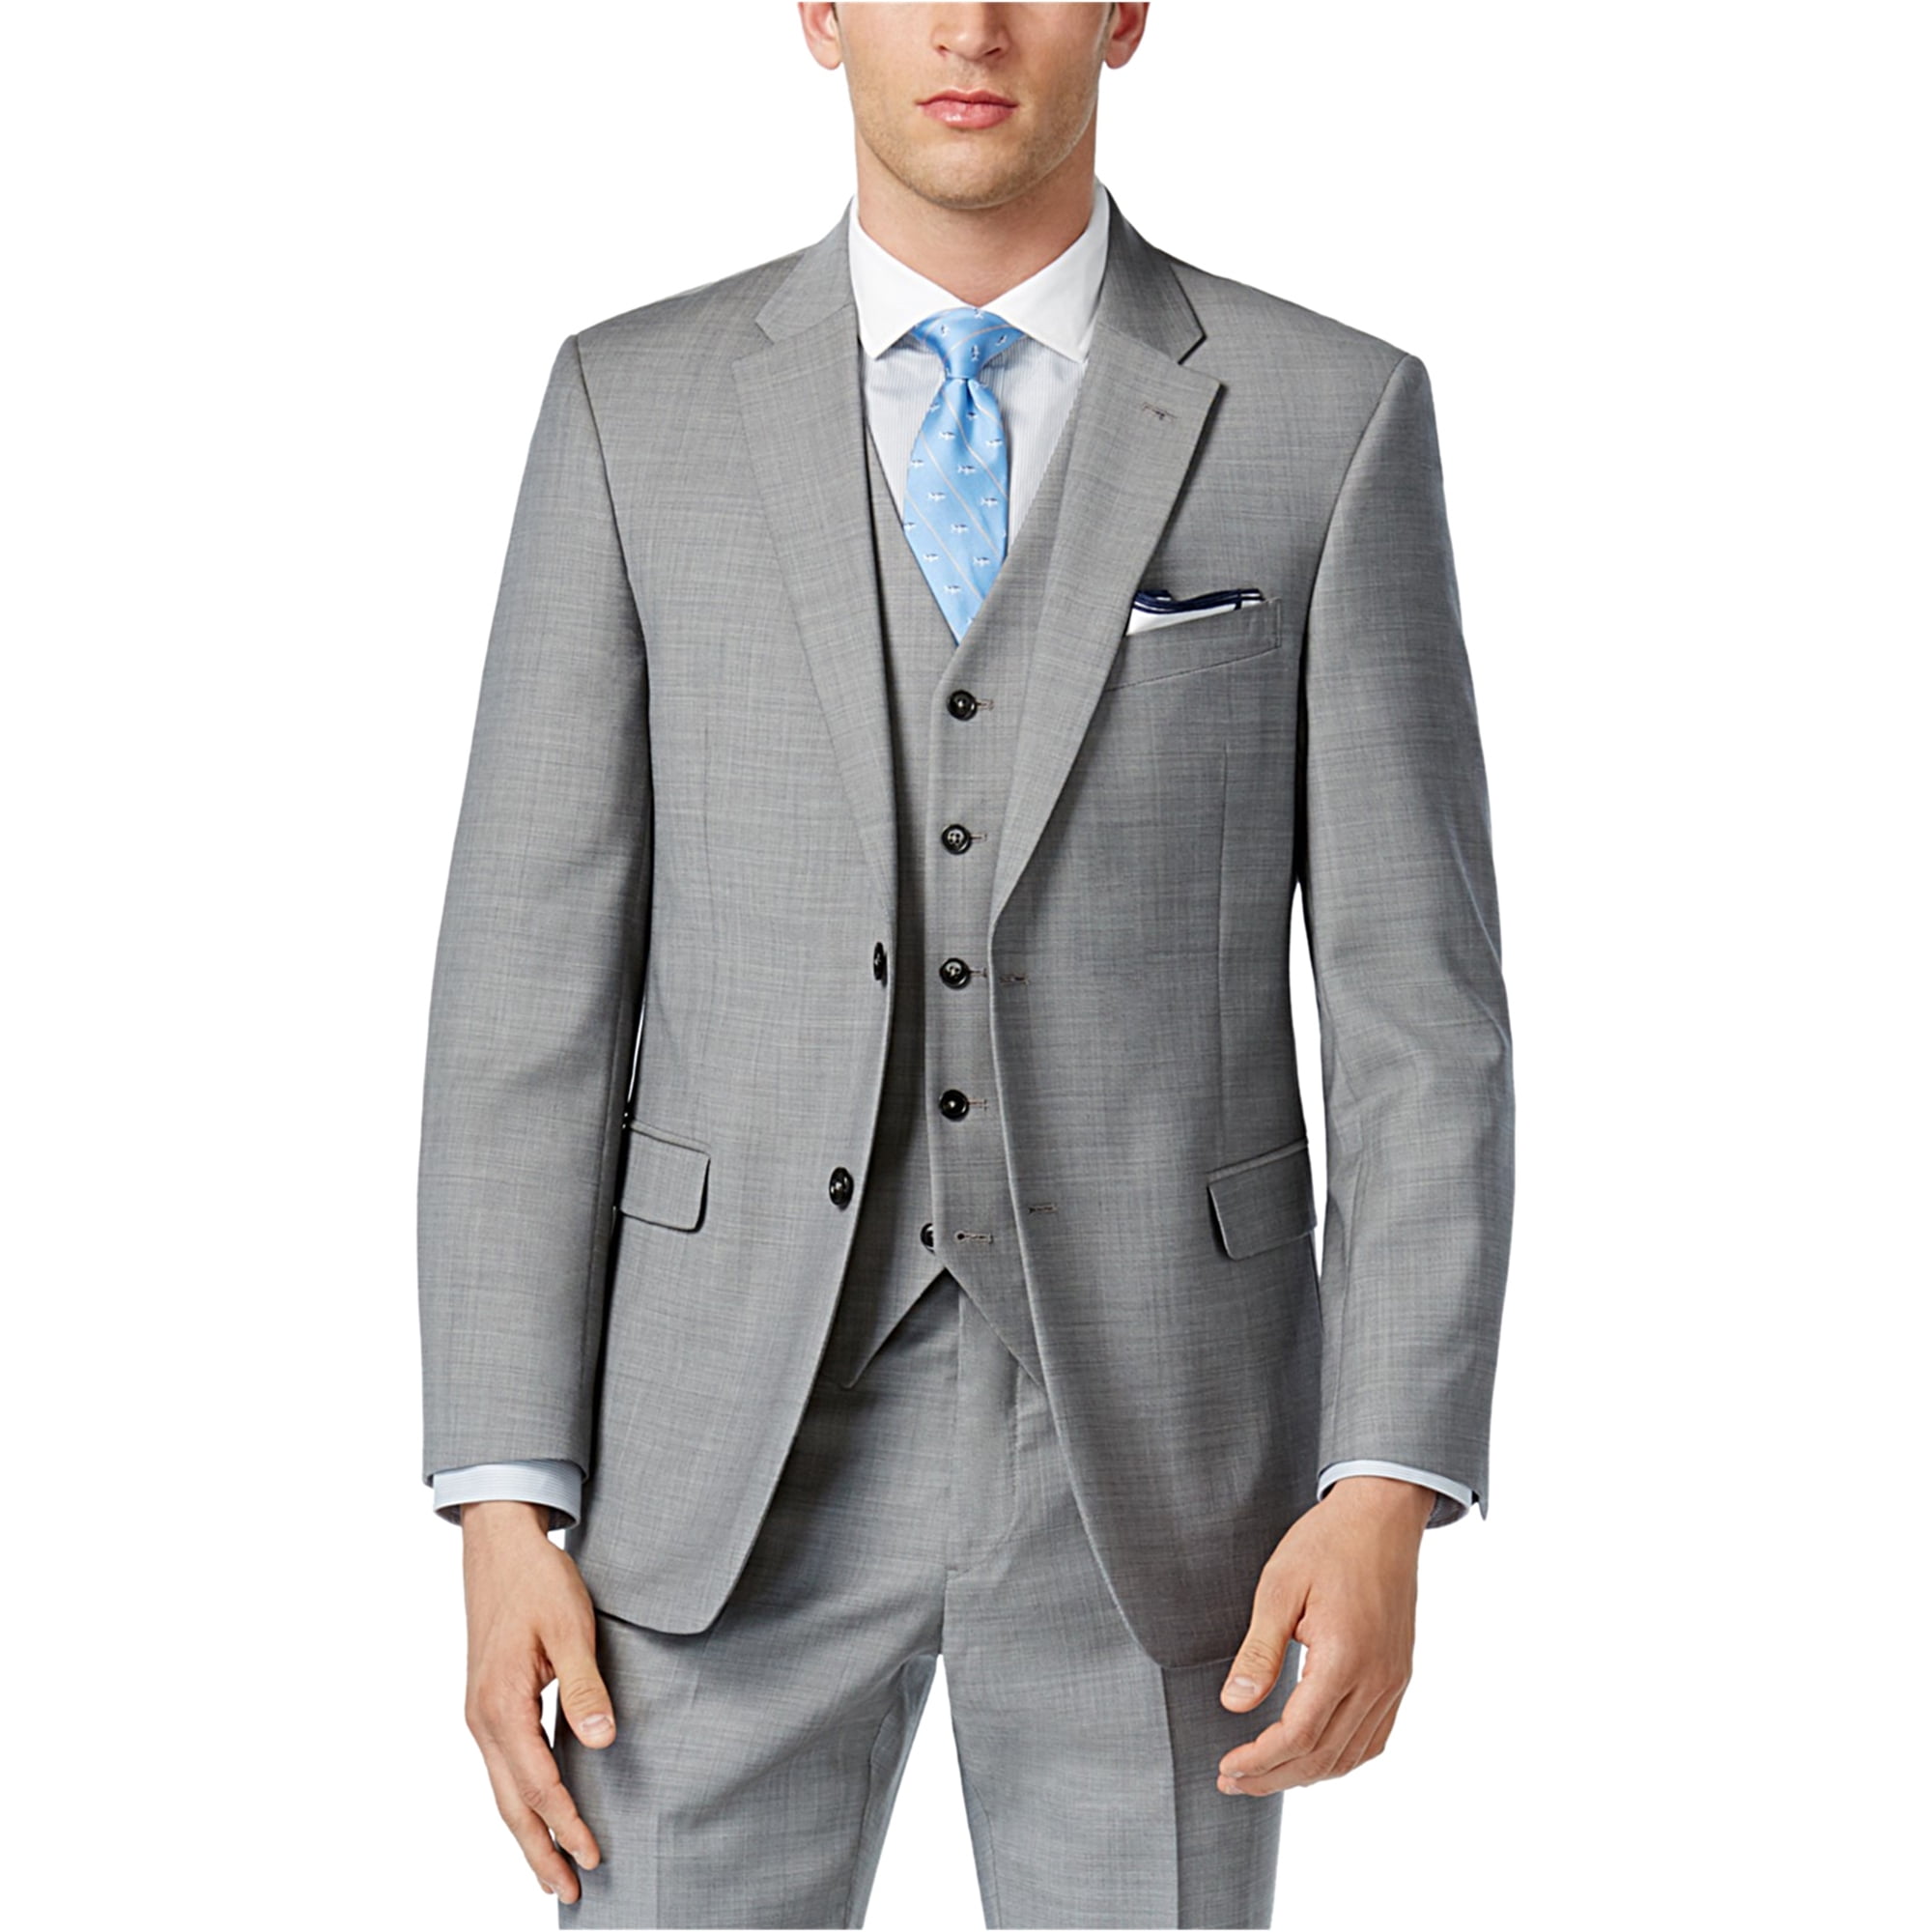 Already Hidden ozone Tommy Hilfiger Mens Modern Fit Sportcoat Two Button Blazer Jacket grey 42 -  Walmart.com